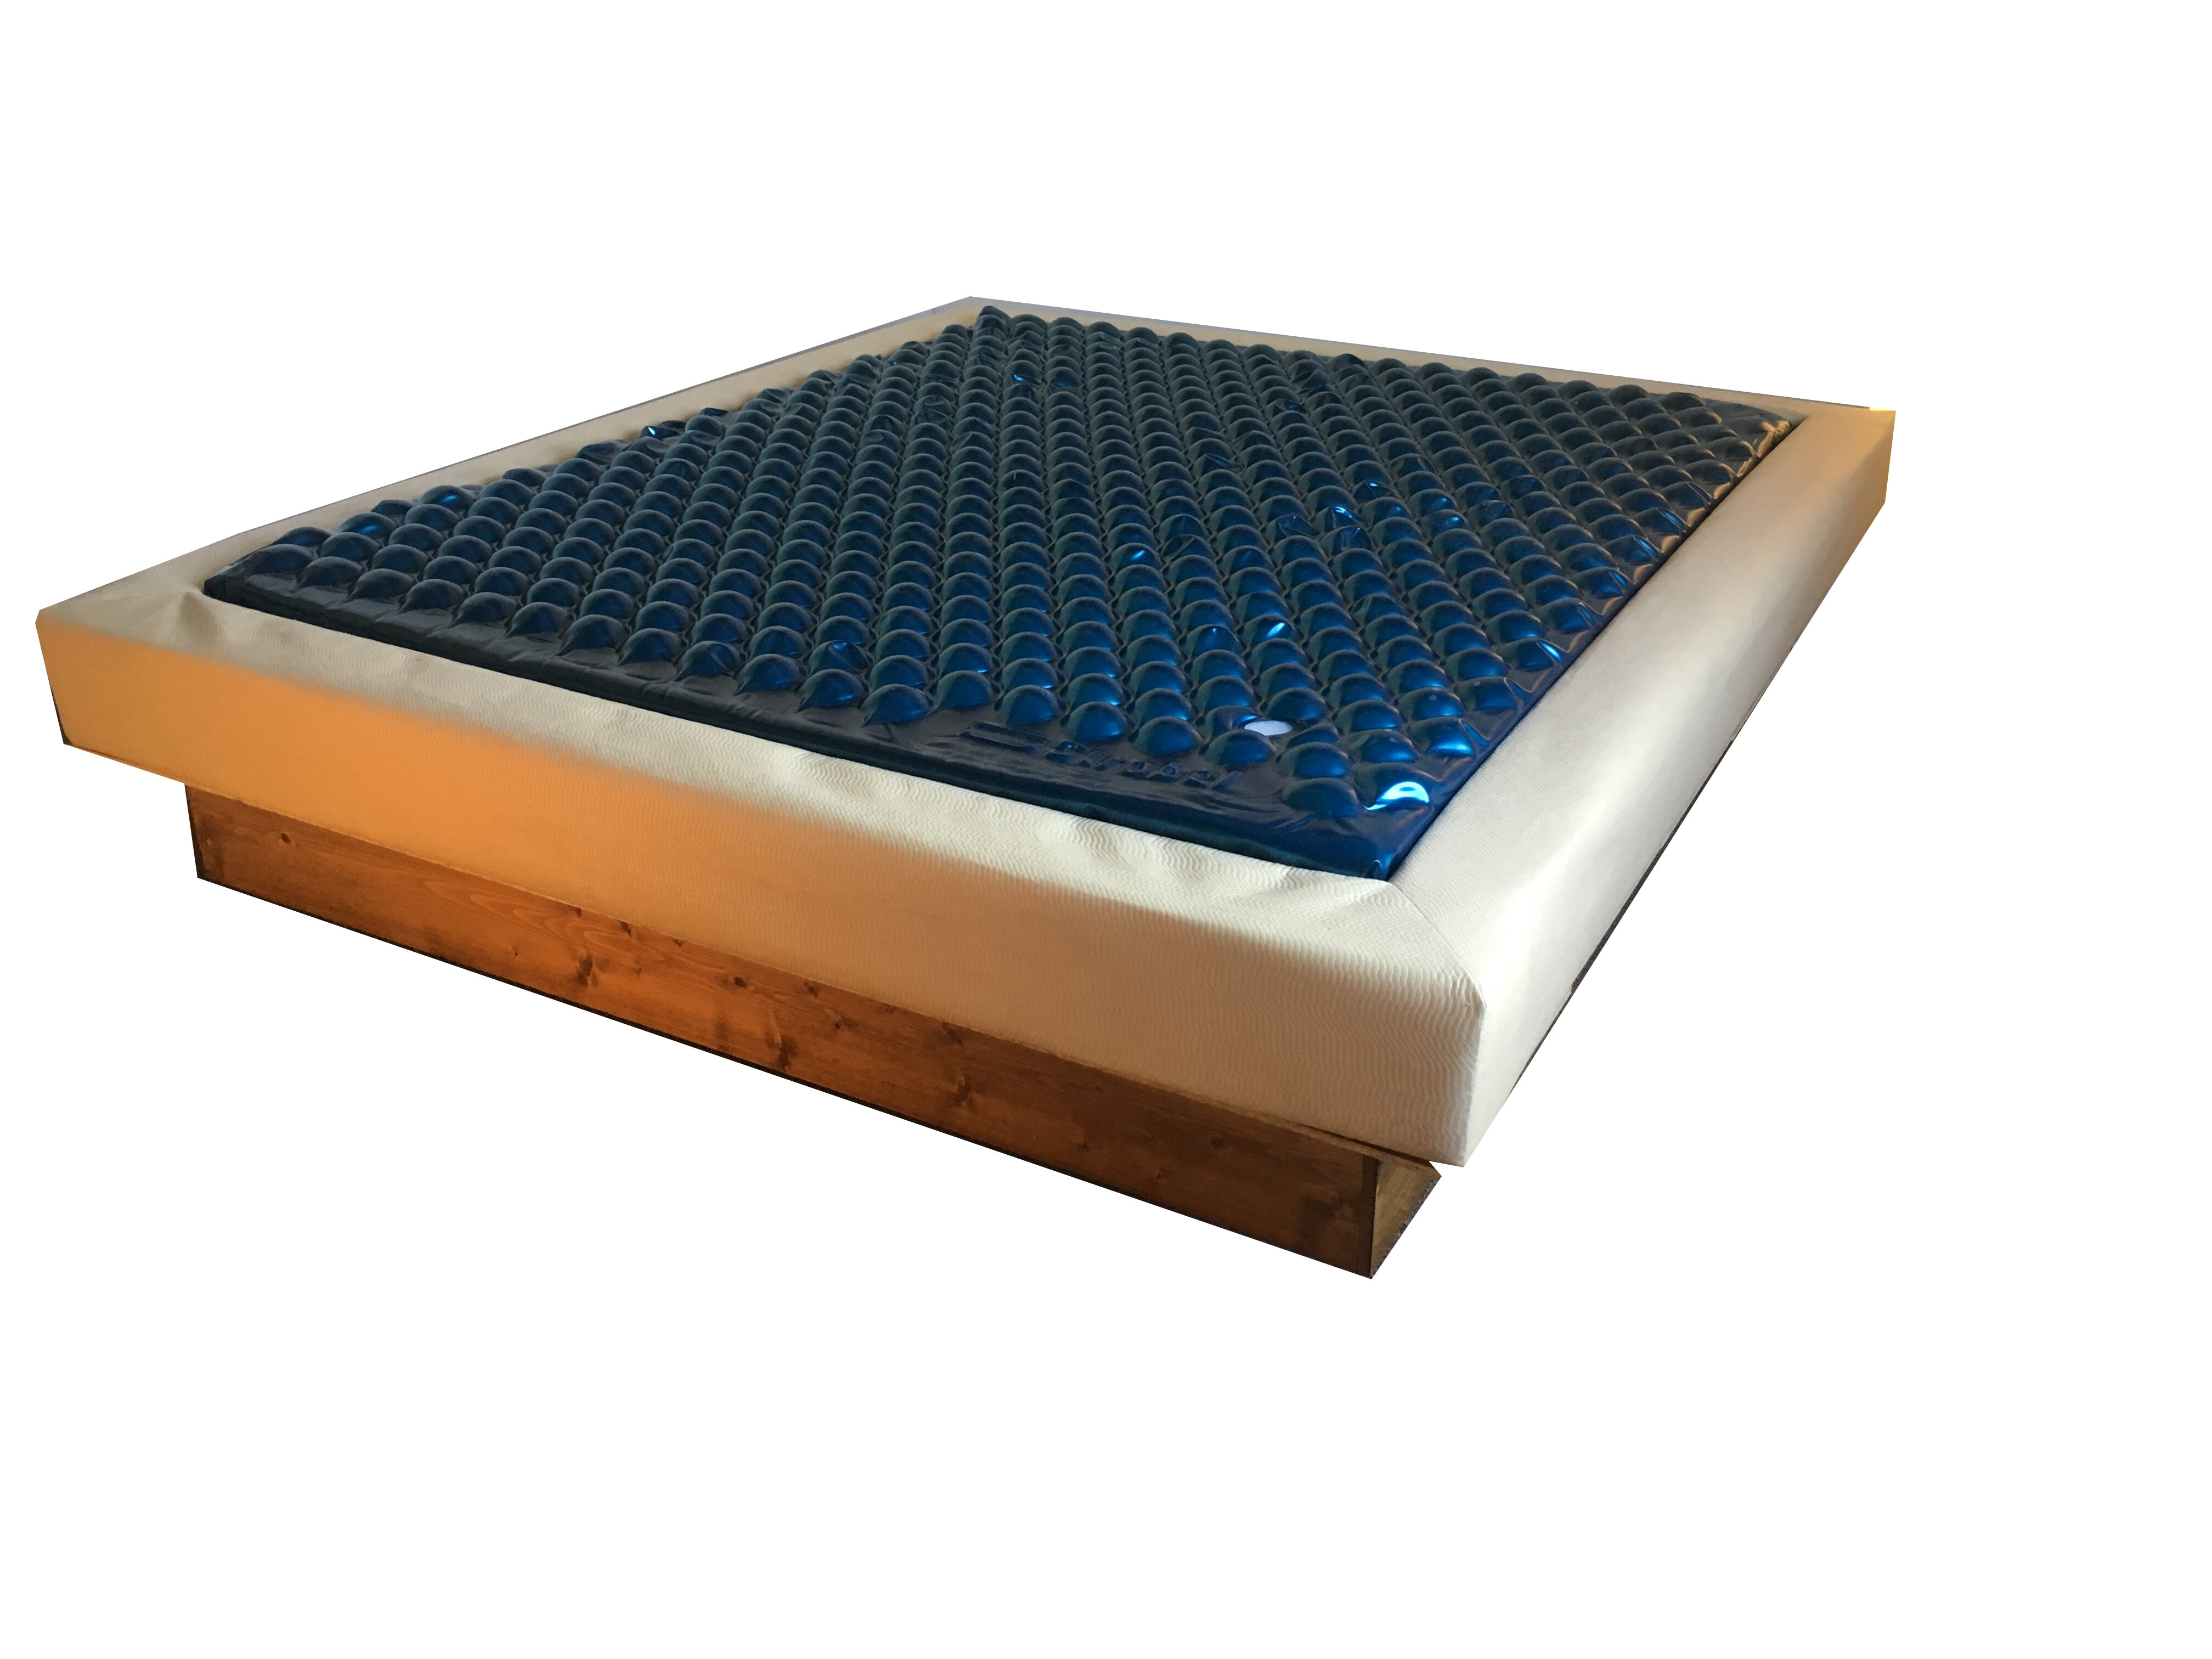 turn air mattress into waterbed